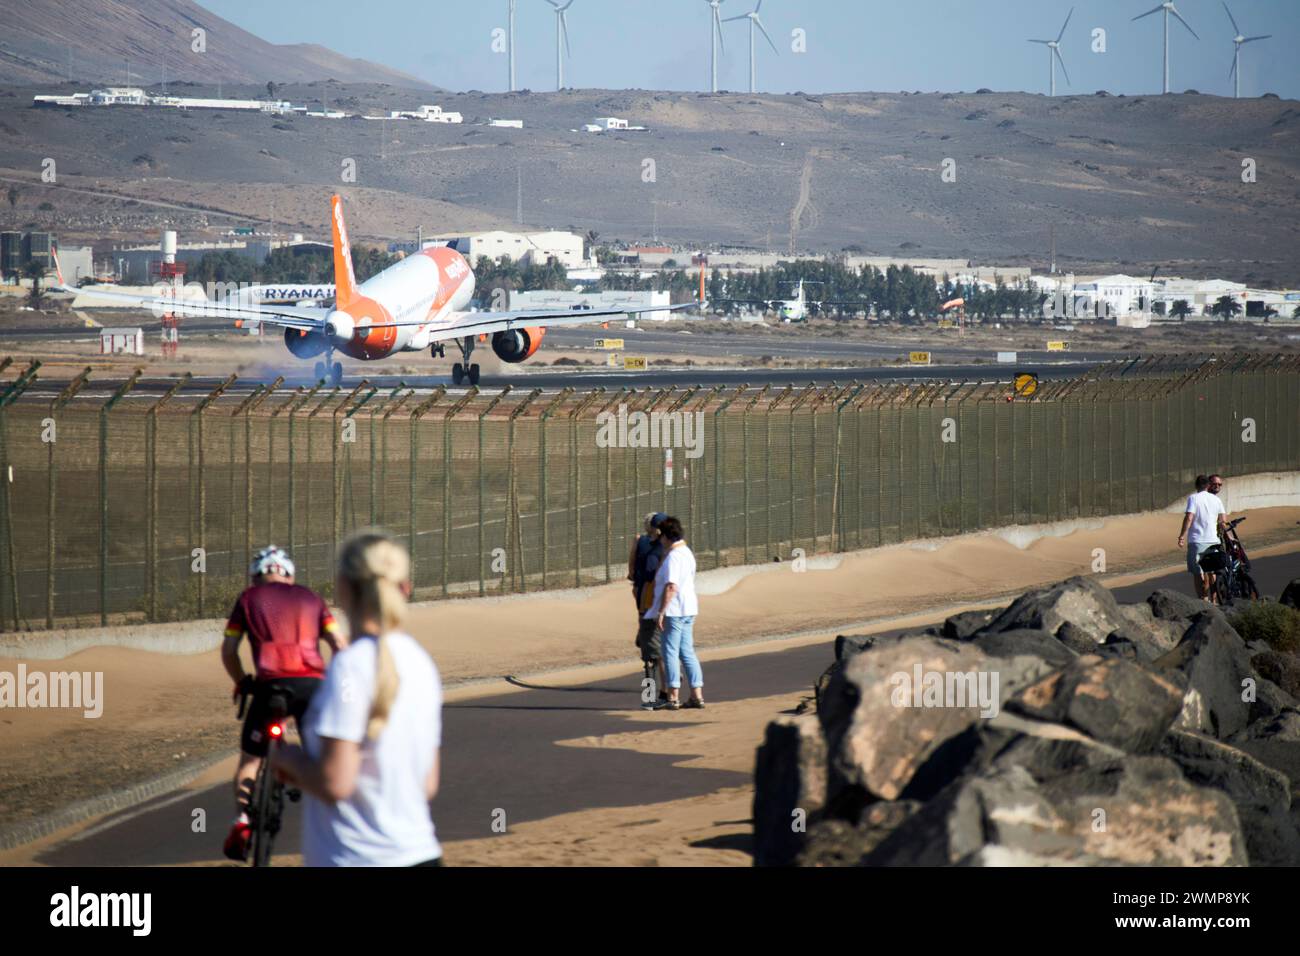 Touristen beobachten, wie easyjet airbus a320 Flugzeuge g-uzhh am Ass arrecife Flughafen Lanzarote, Kanarische Inseln, spanien landen Stockfoto